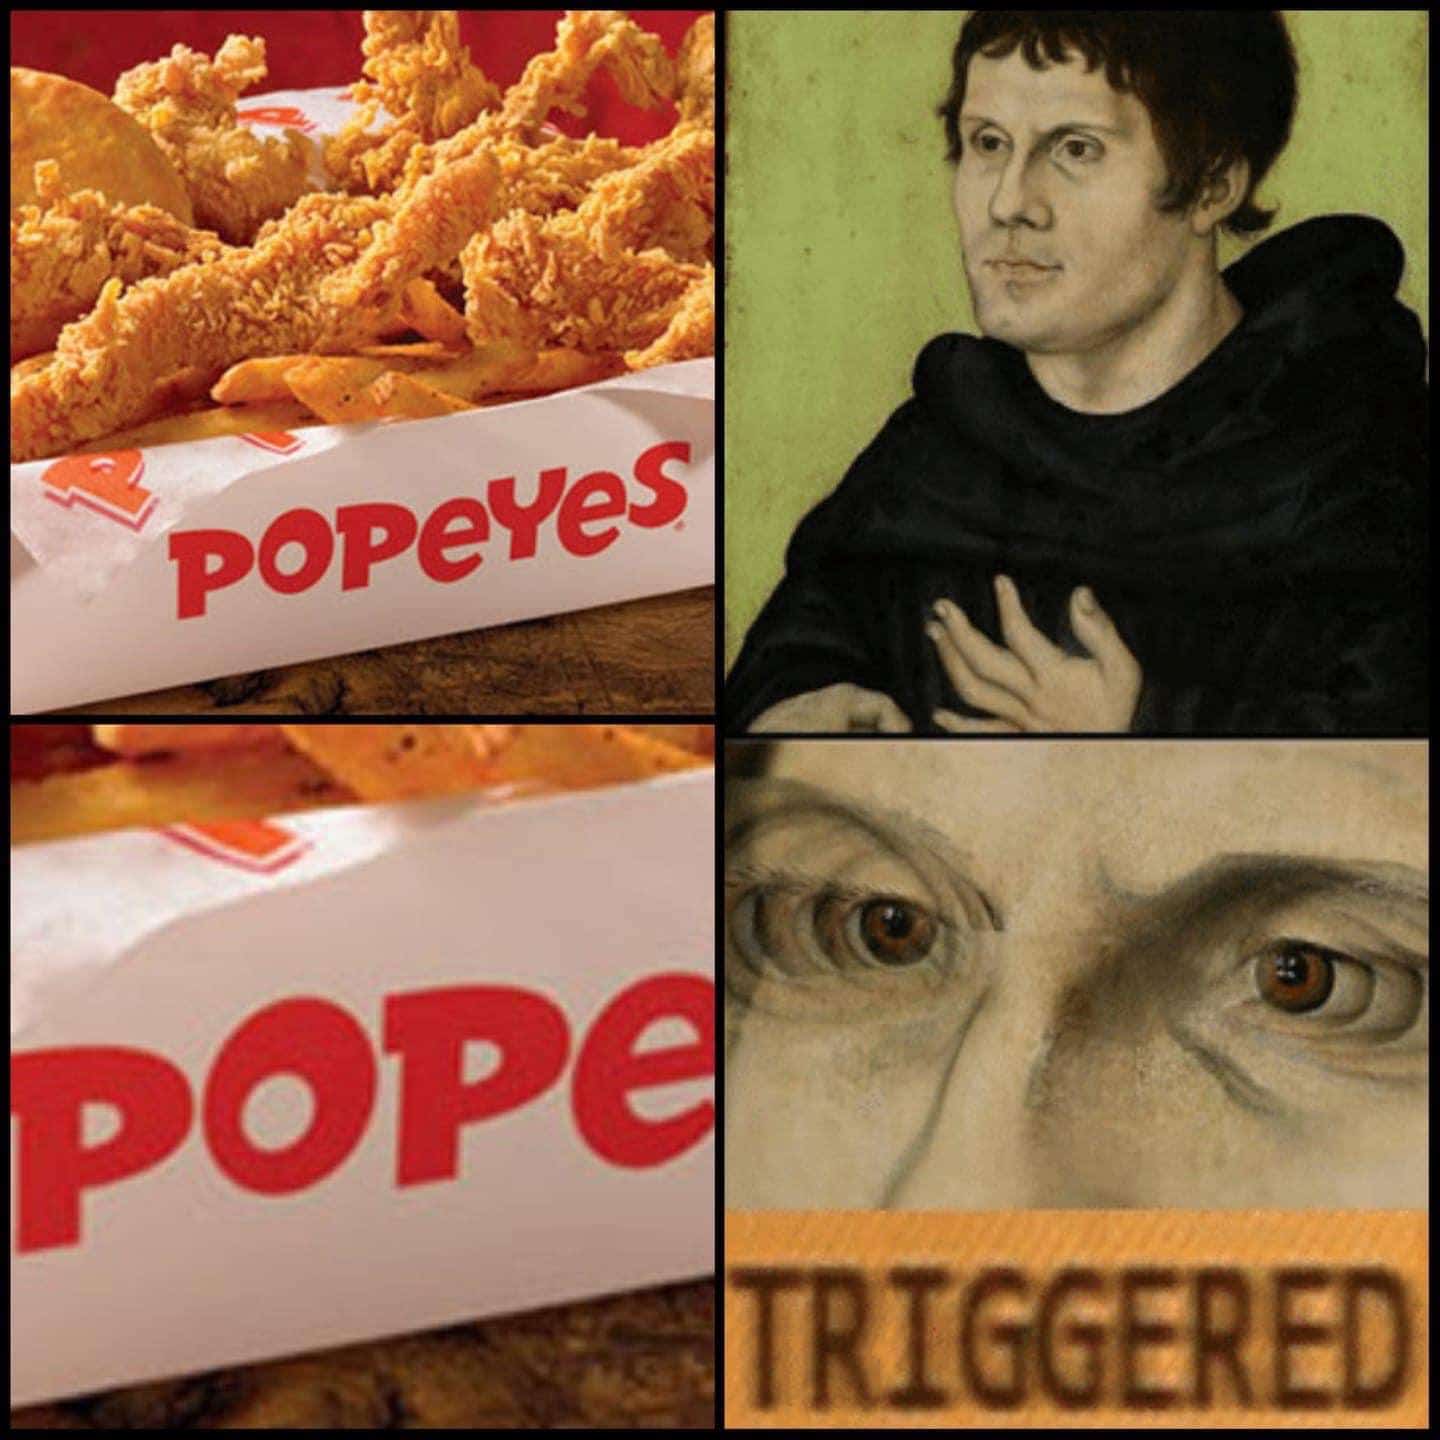 christian christian-memes christian text: popeyes 